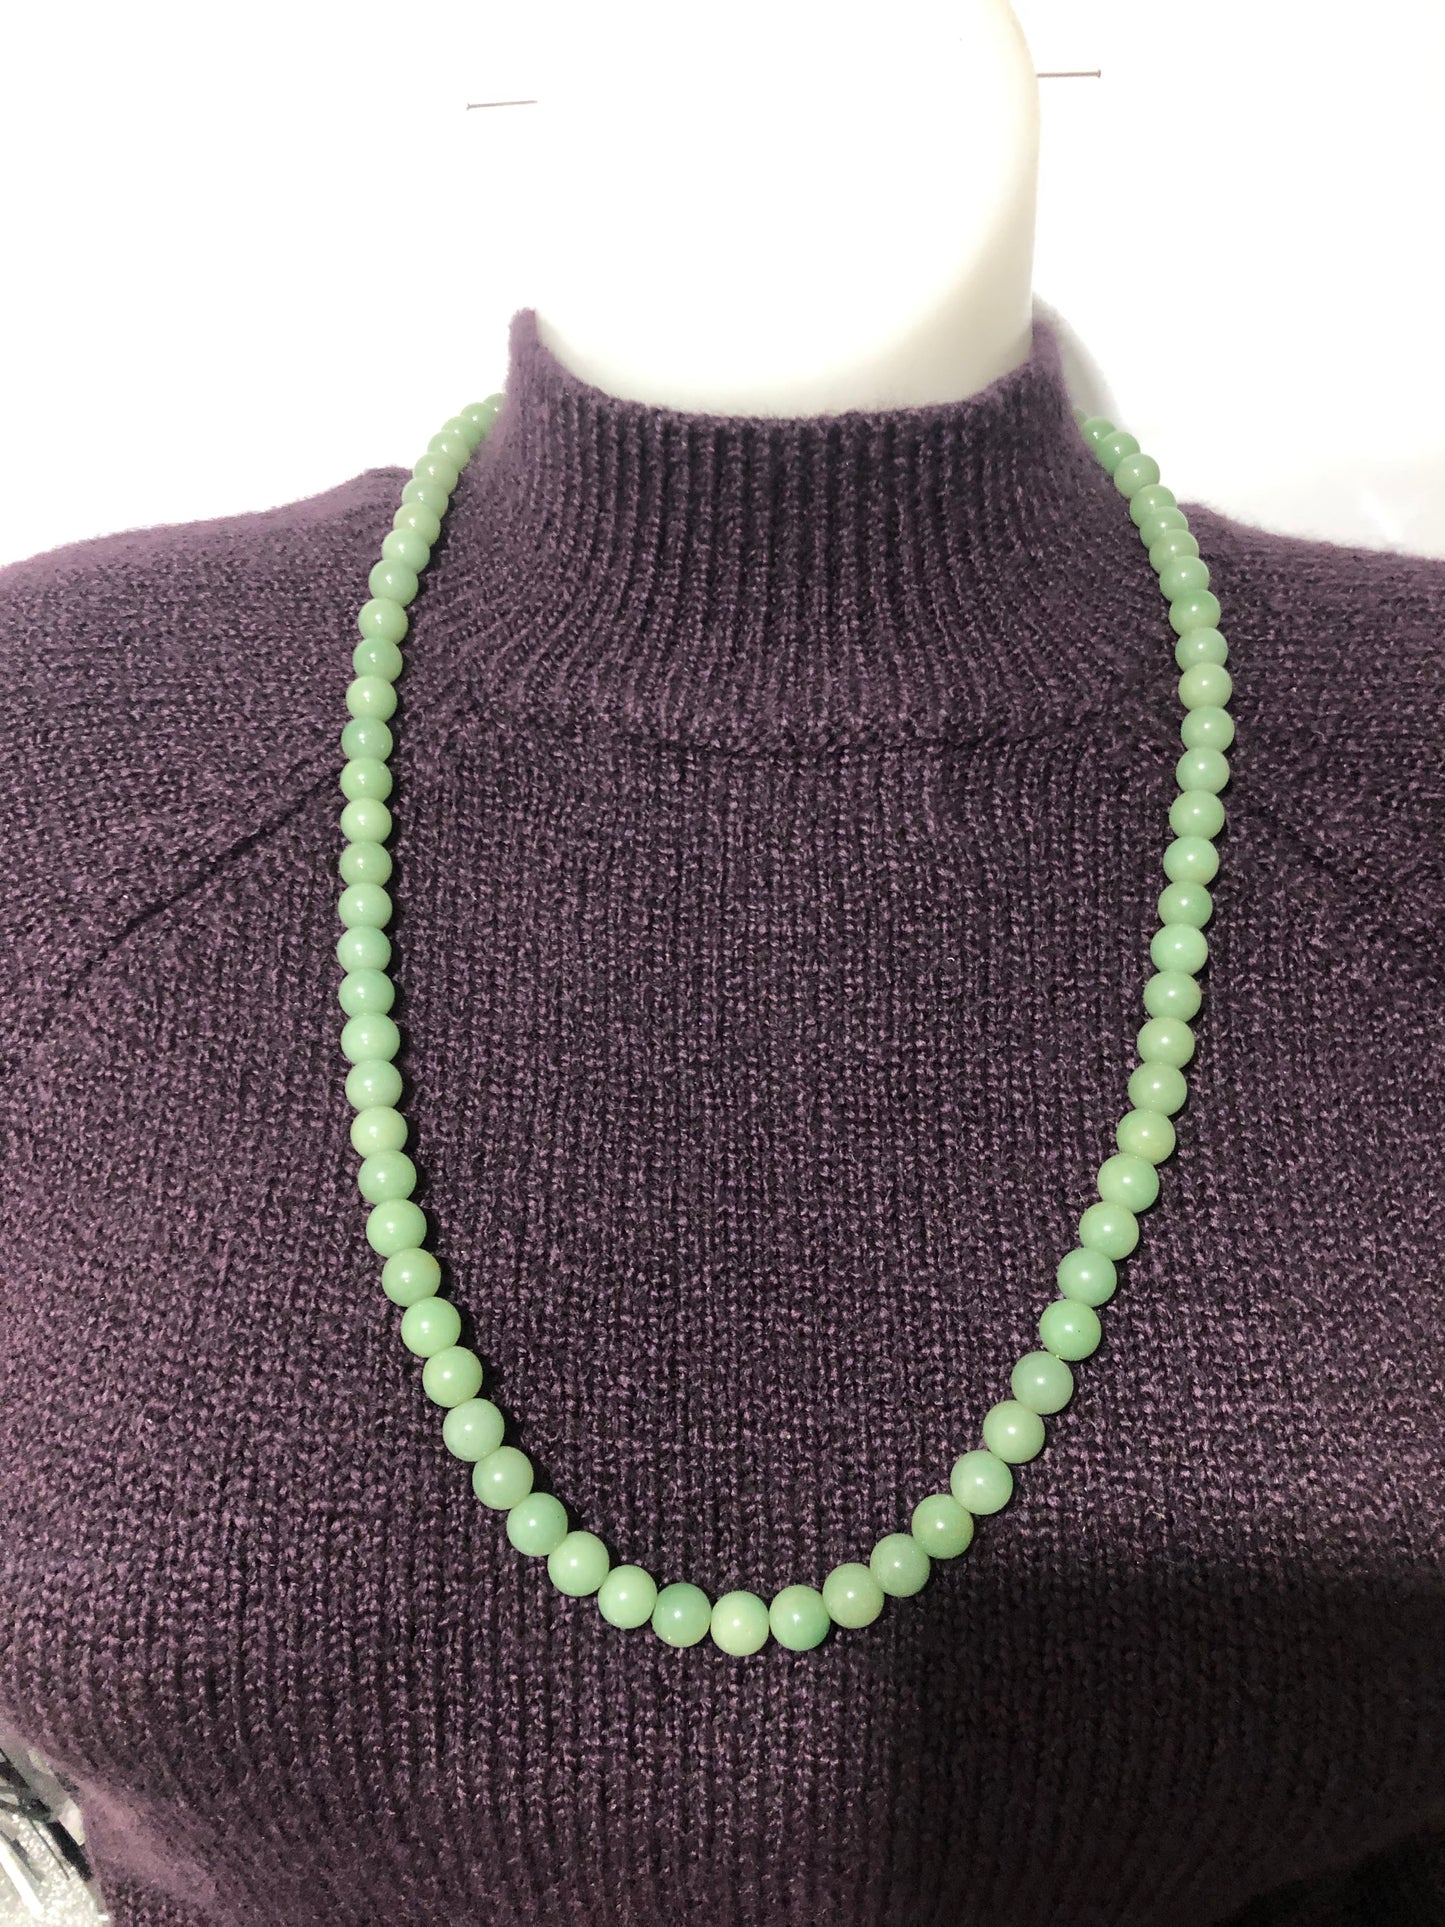 Vintage green jade gemstone bead necklace 27" long